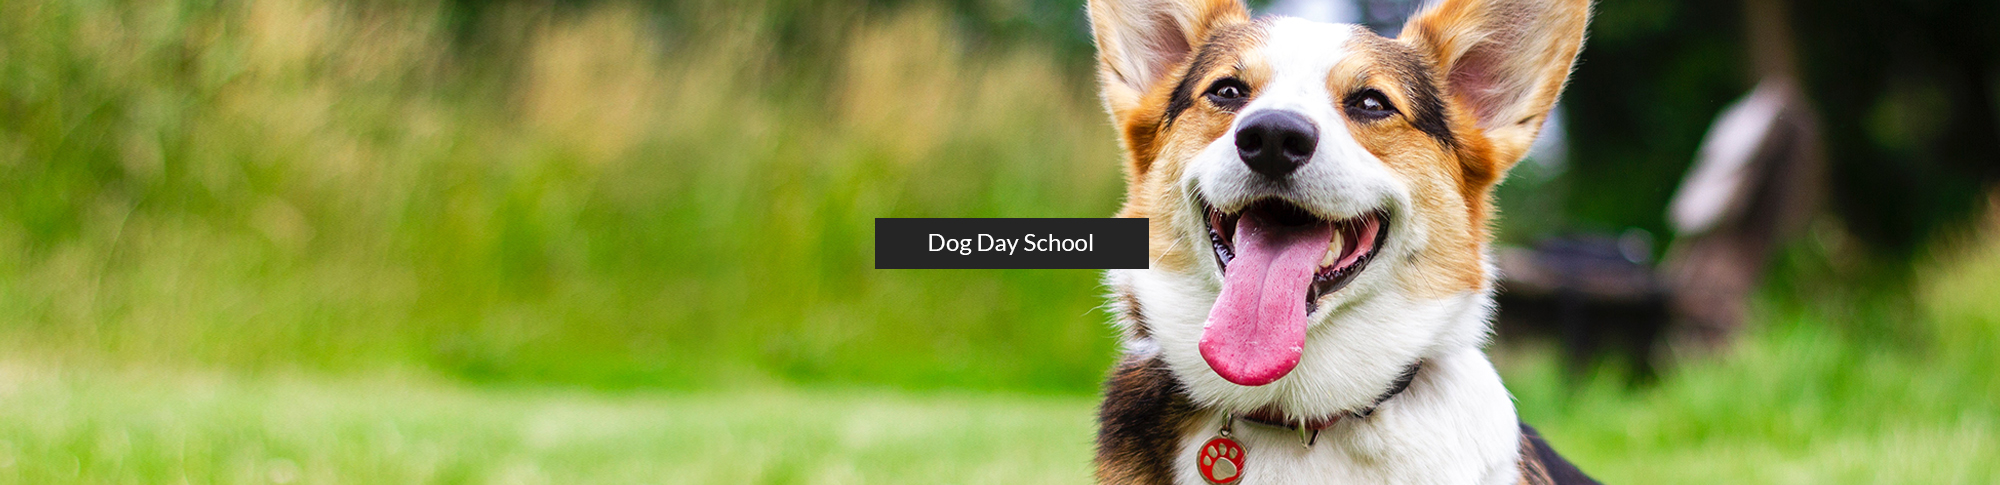 Dog Day School, Puppy Prep School - Sit n Stay Pet Services